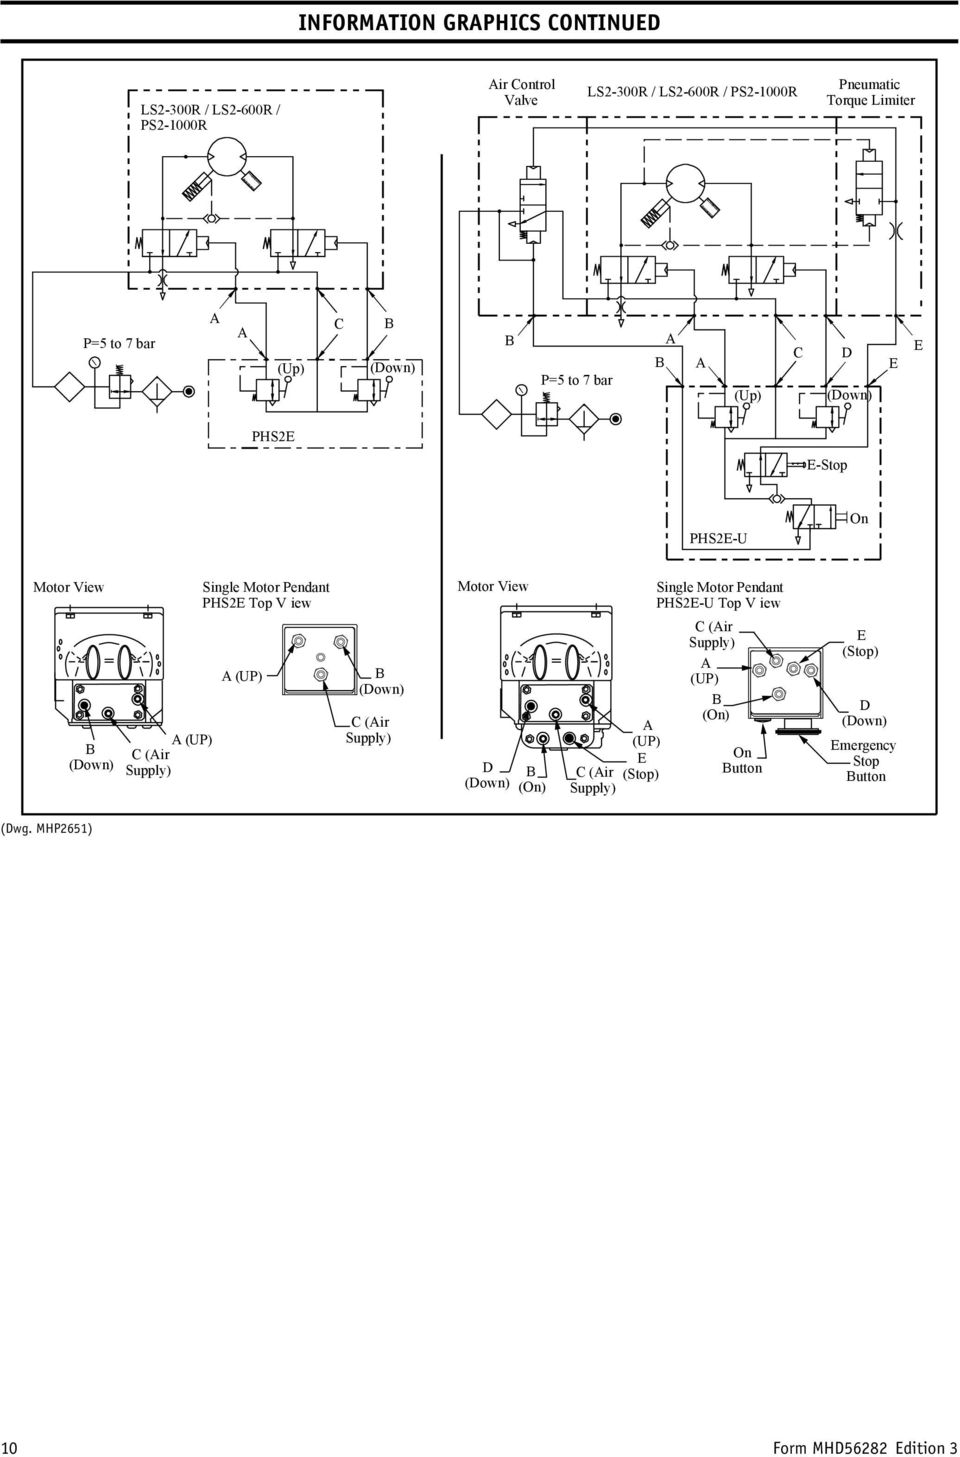 Single Motor Pendant PHS2E Top V iew A ( UP) B (Down) C (Air Supply) Motor View D (Down) B (On) A (UP) E C (Air (Stop) Supply) Single Motor